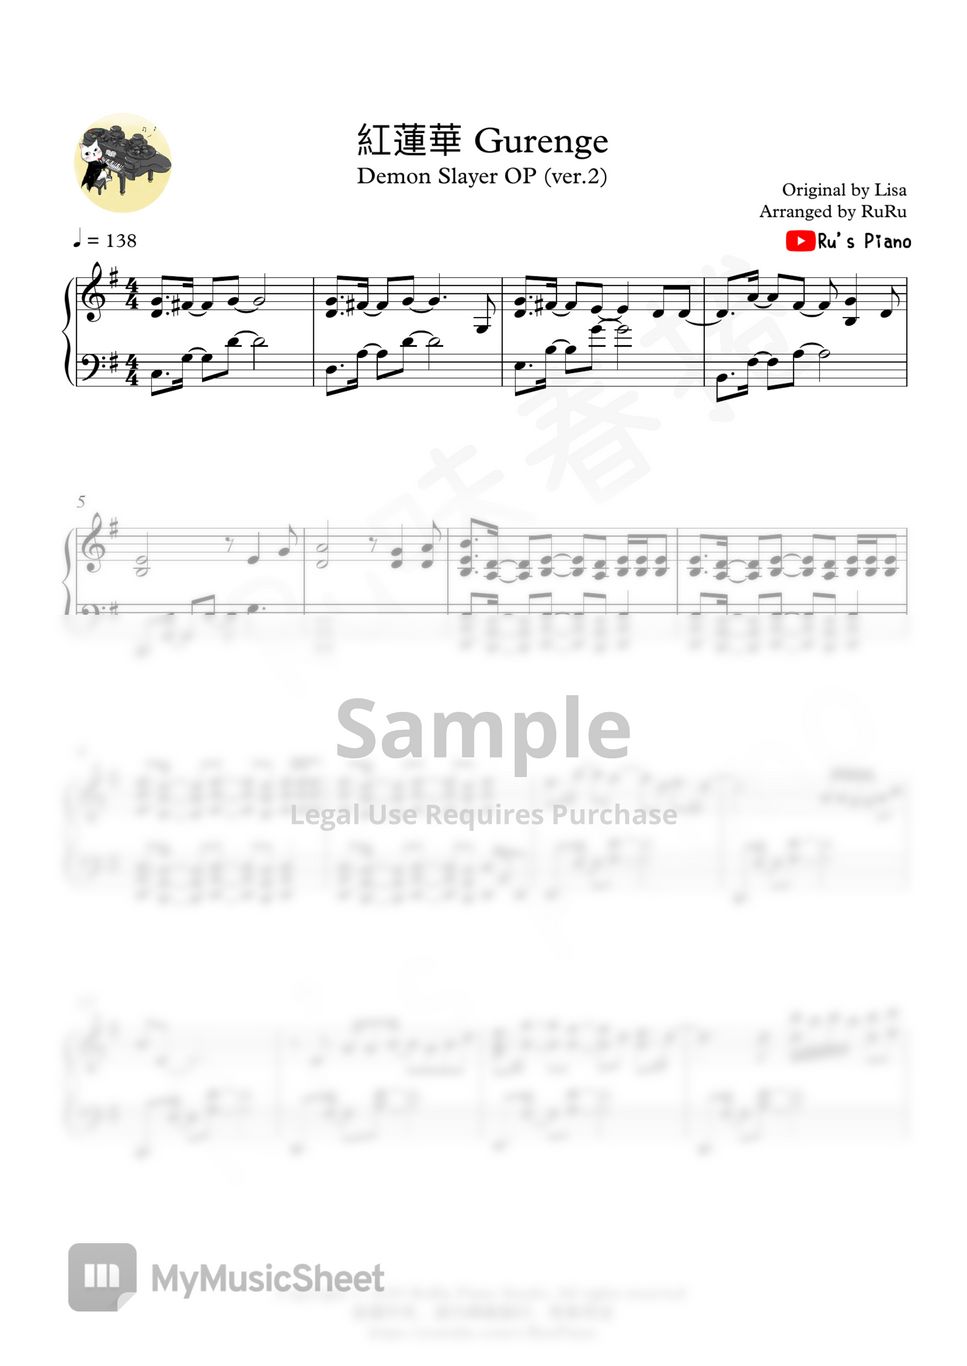 LiSA - 紅蓮華 Gurenge (Demon Slayer OP) by Ru's Piano